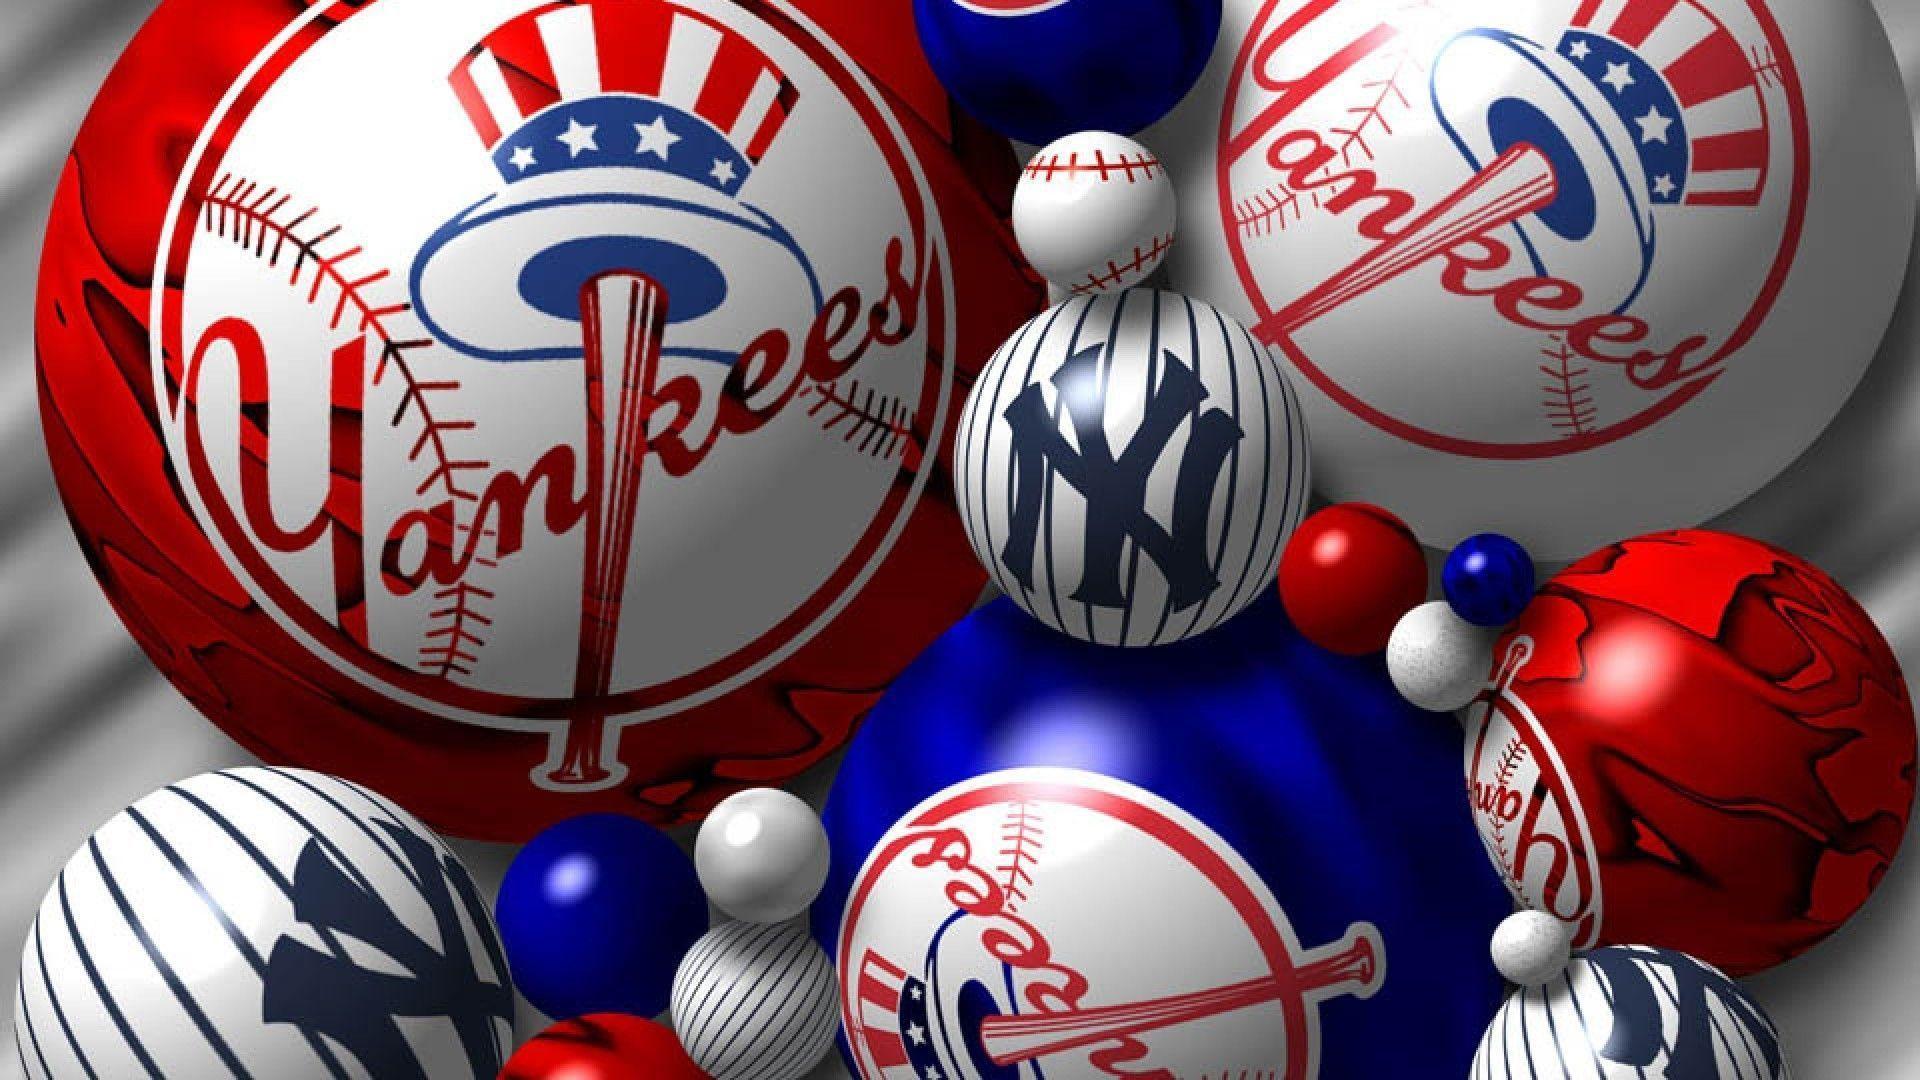 Enjoy this new New York Yankees desktop background. New York